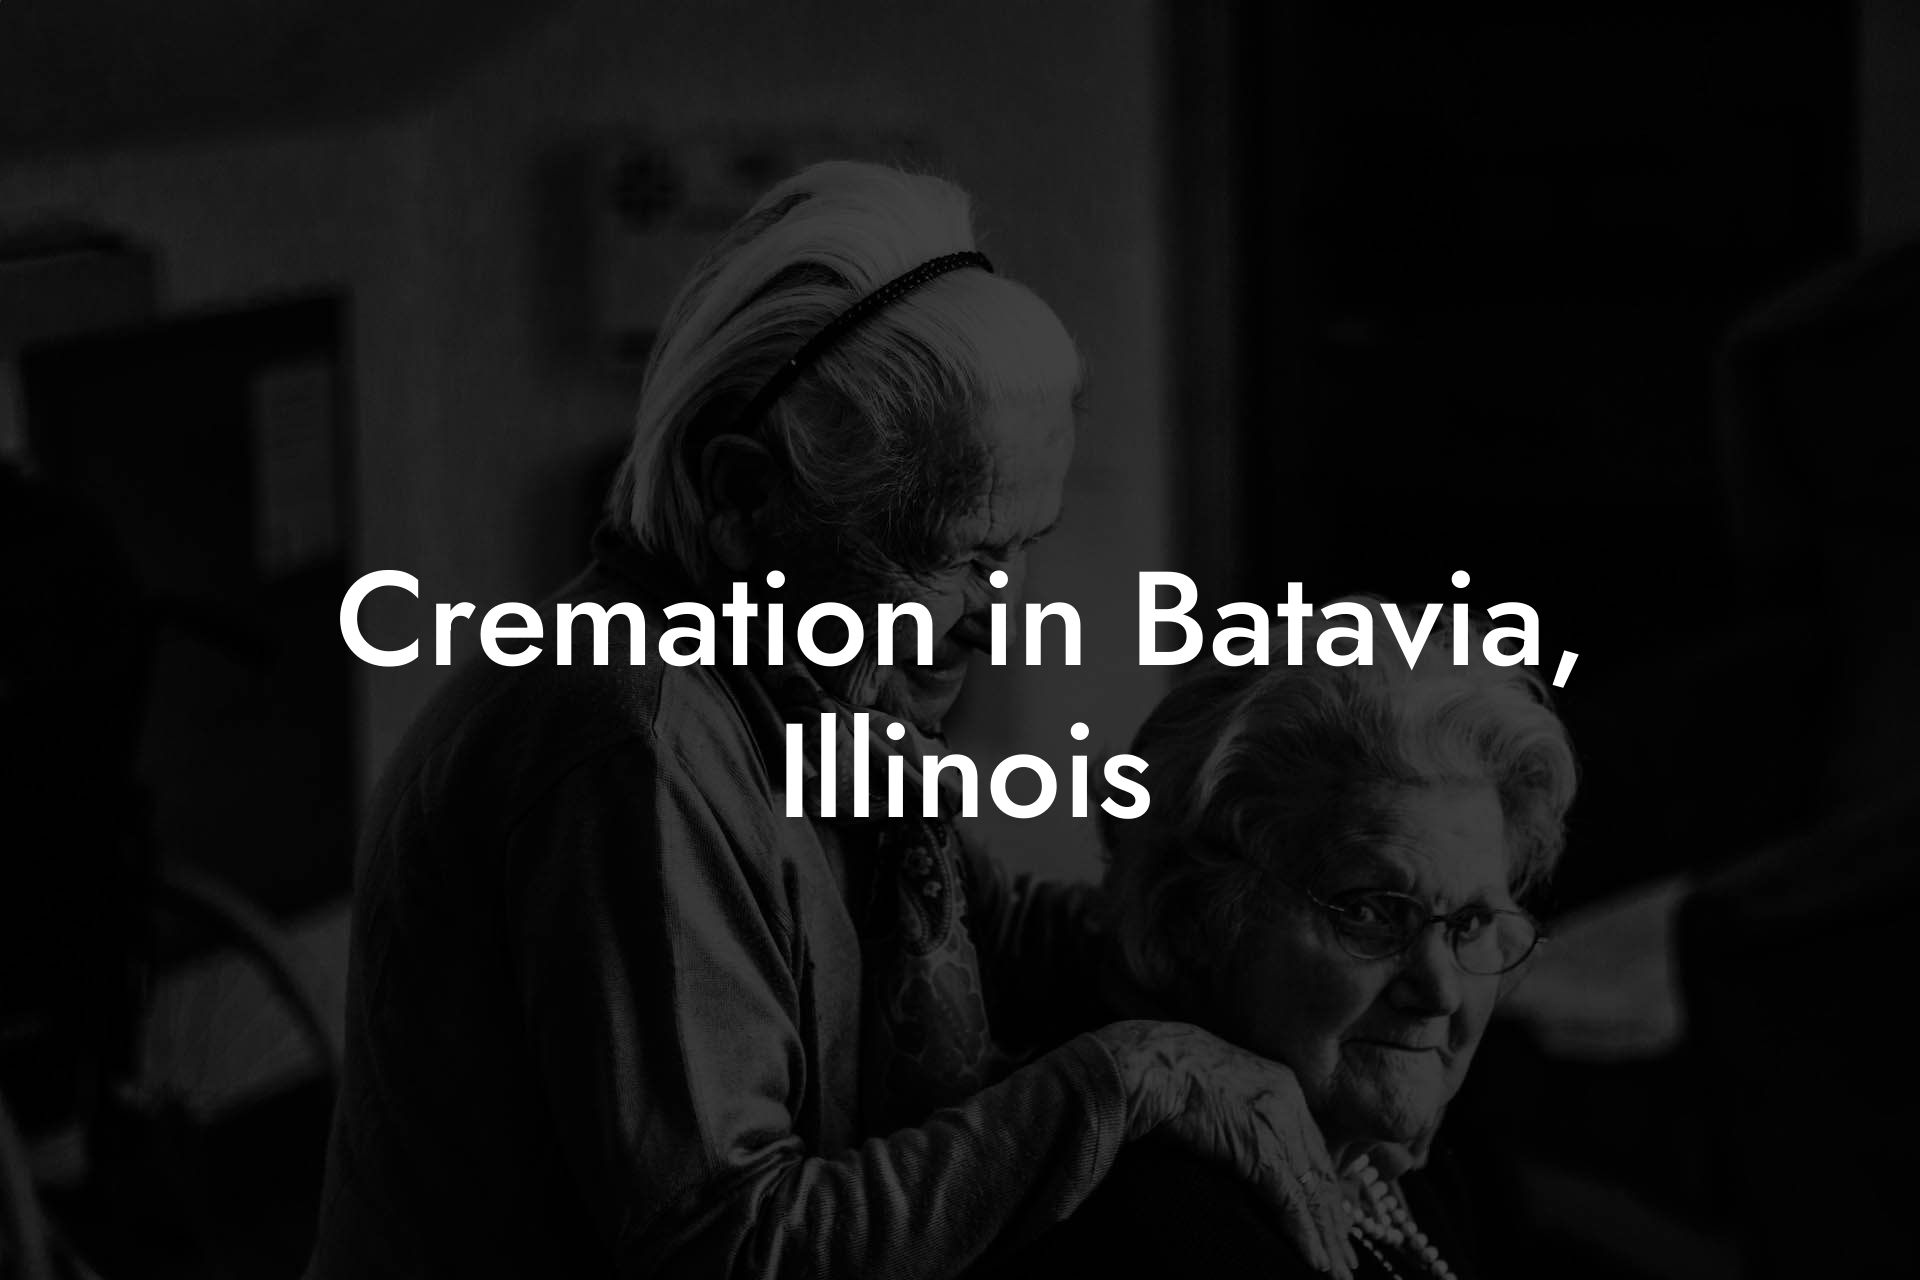 Cremation in Batavia, Illinois